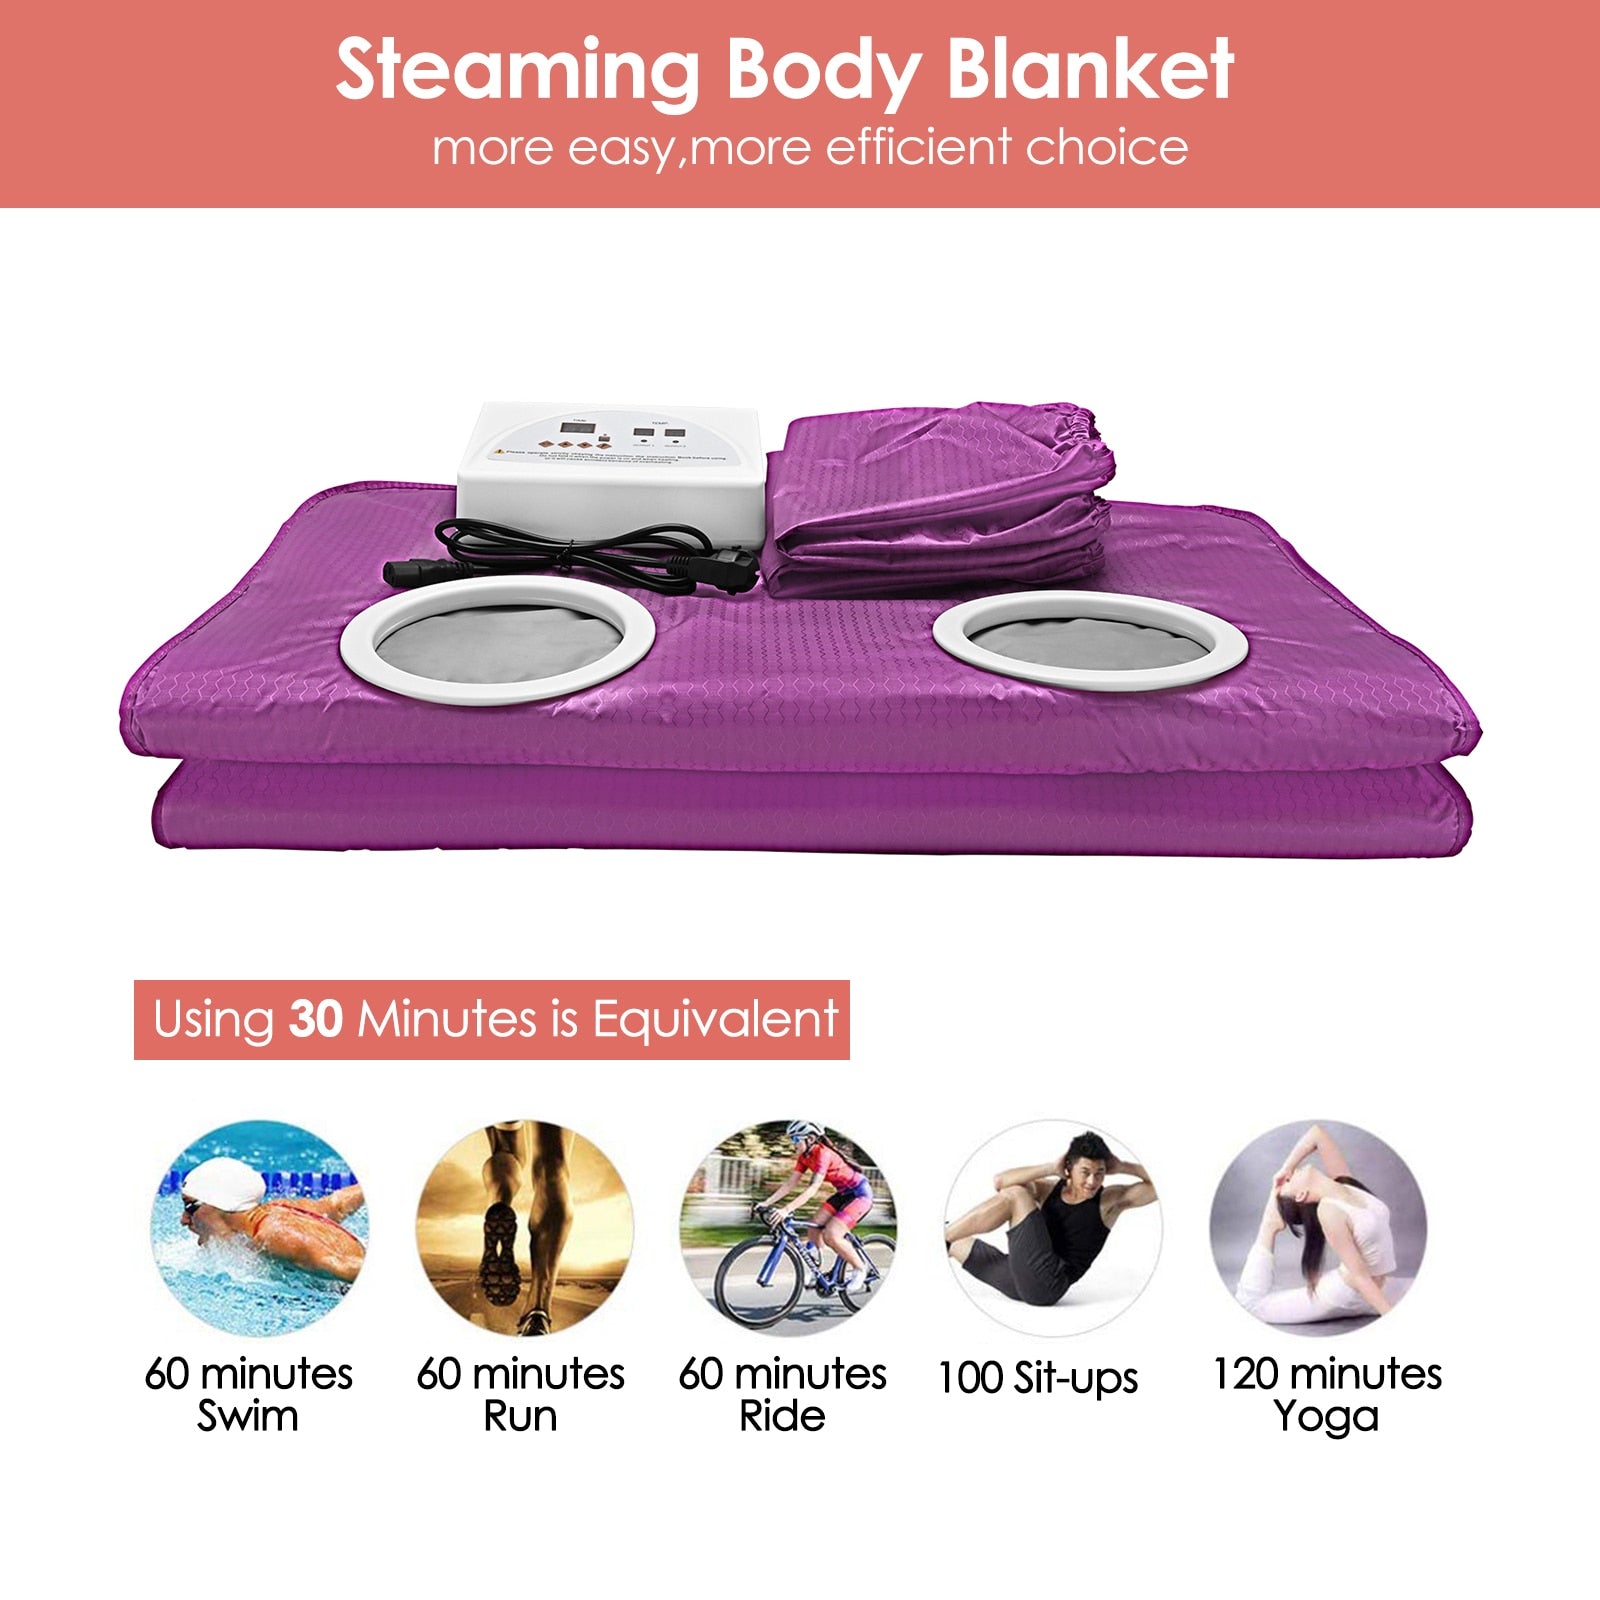 Slimmimg Digital infrare Sauna Blanket Weight Loss Detox Thermal Sauna Heating Blanket with Sleeves Salon Home Spa Women Men